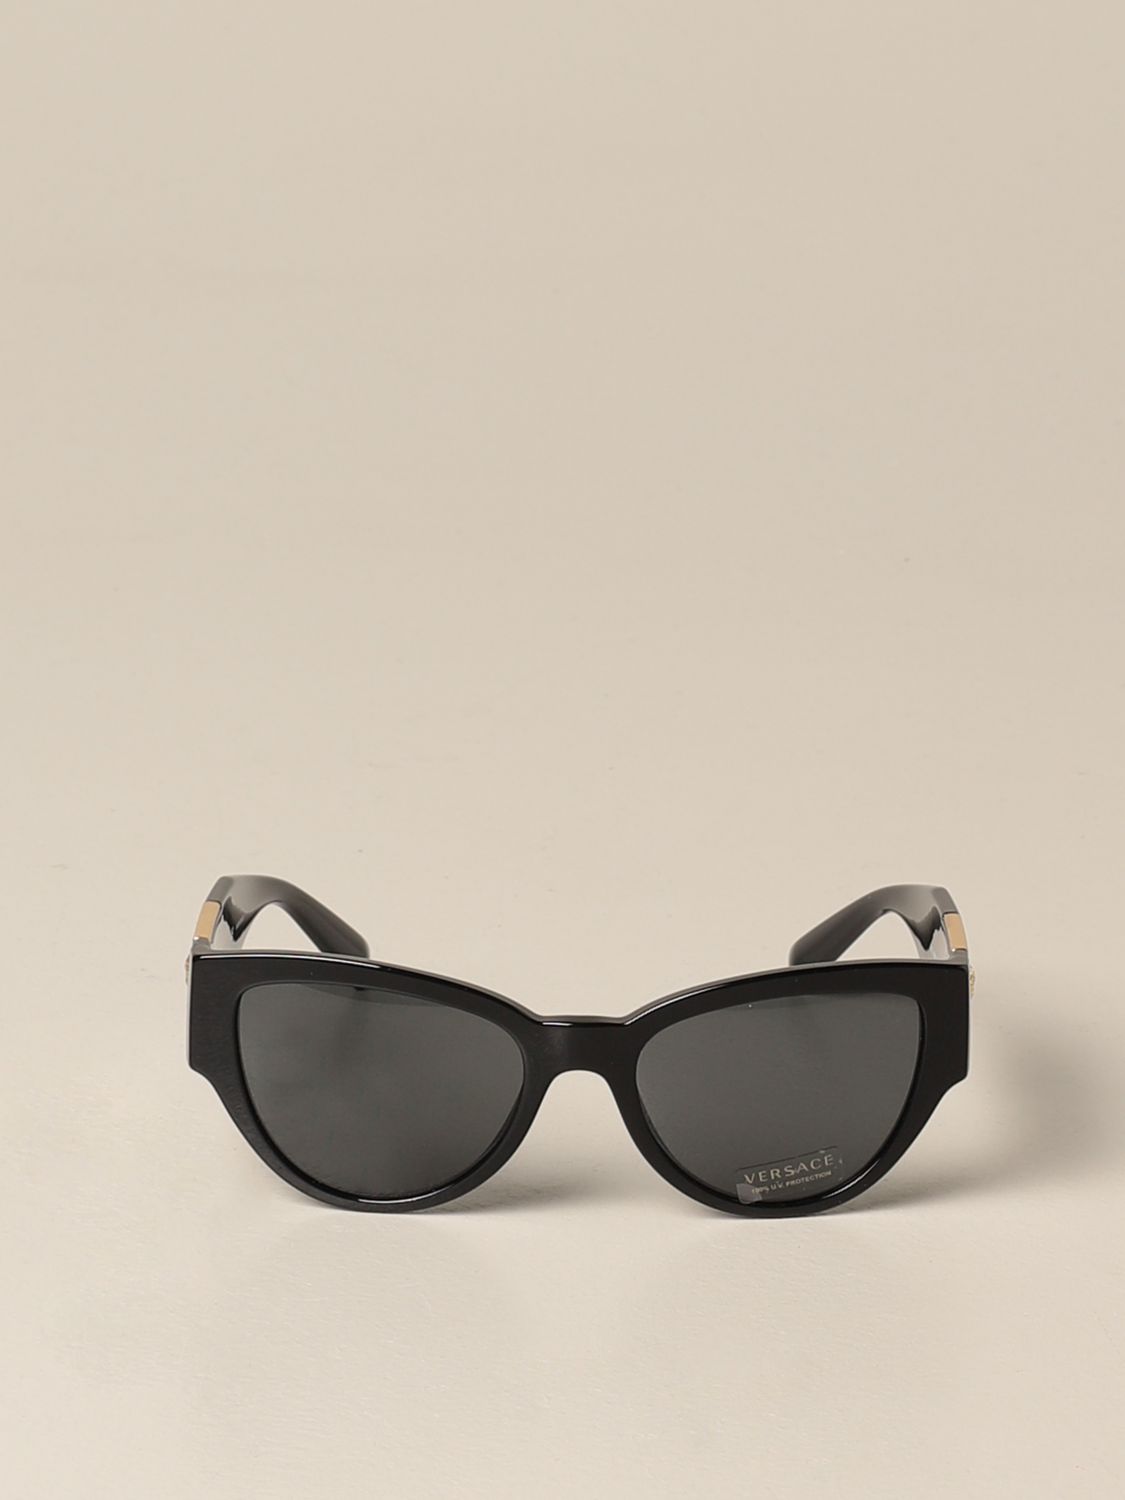 Versace Sunglasses In Acetate With A Medusa Head Black Glasses Versace Mod4398 Gigliocom 